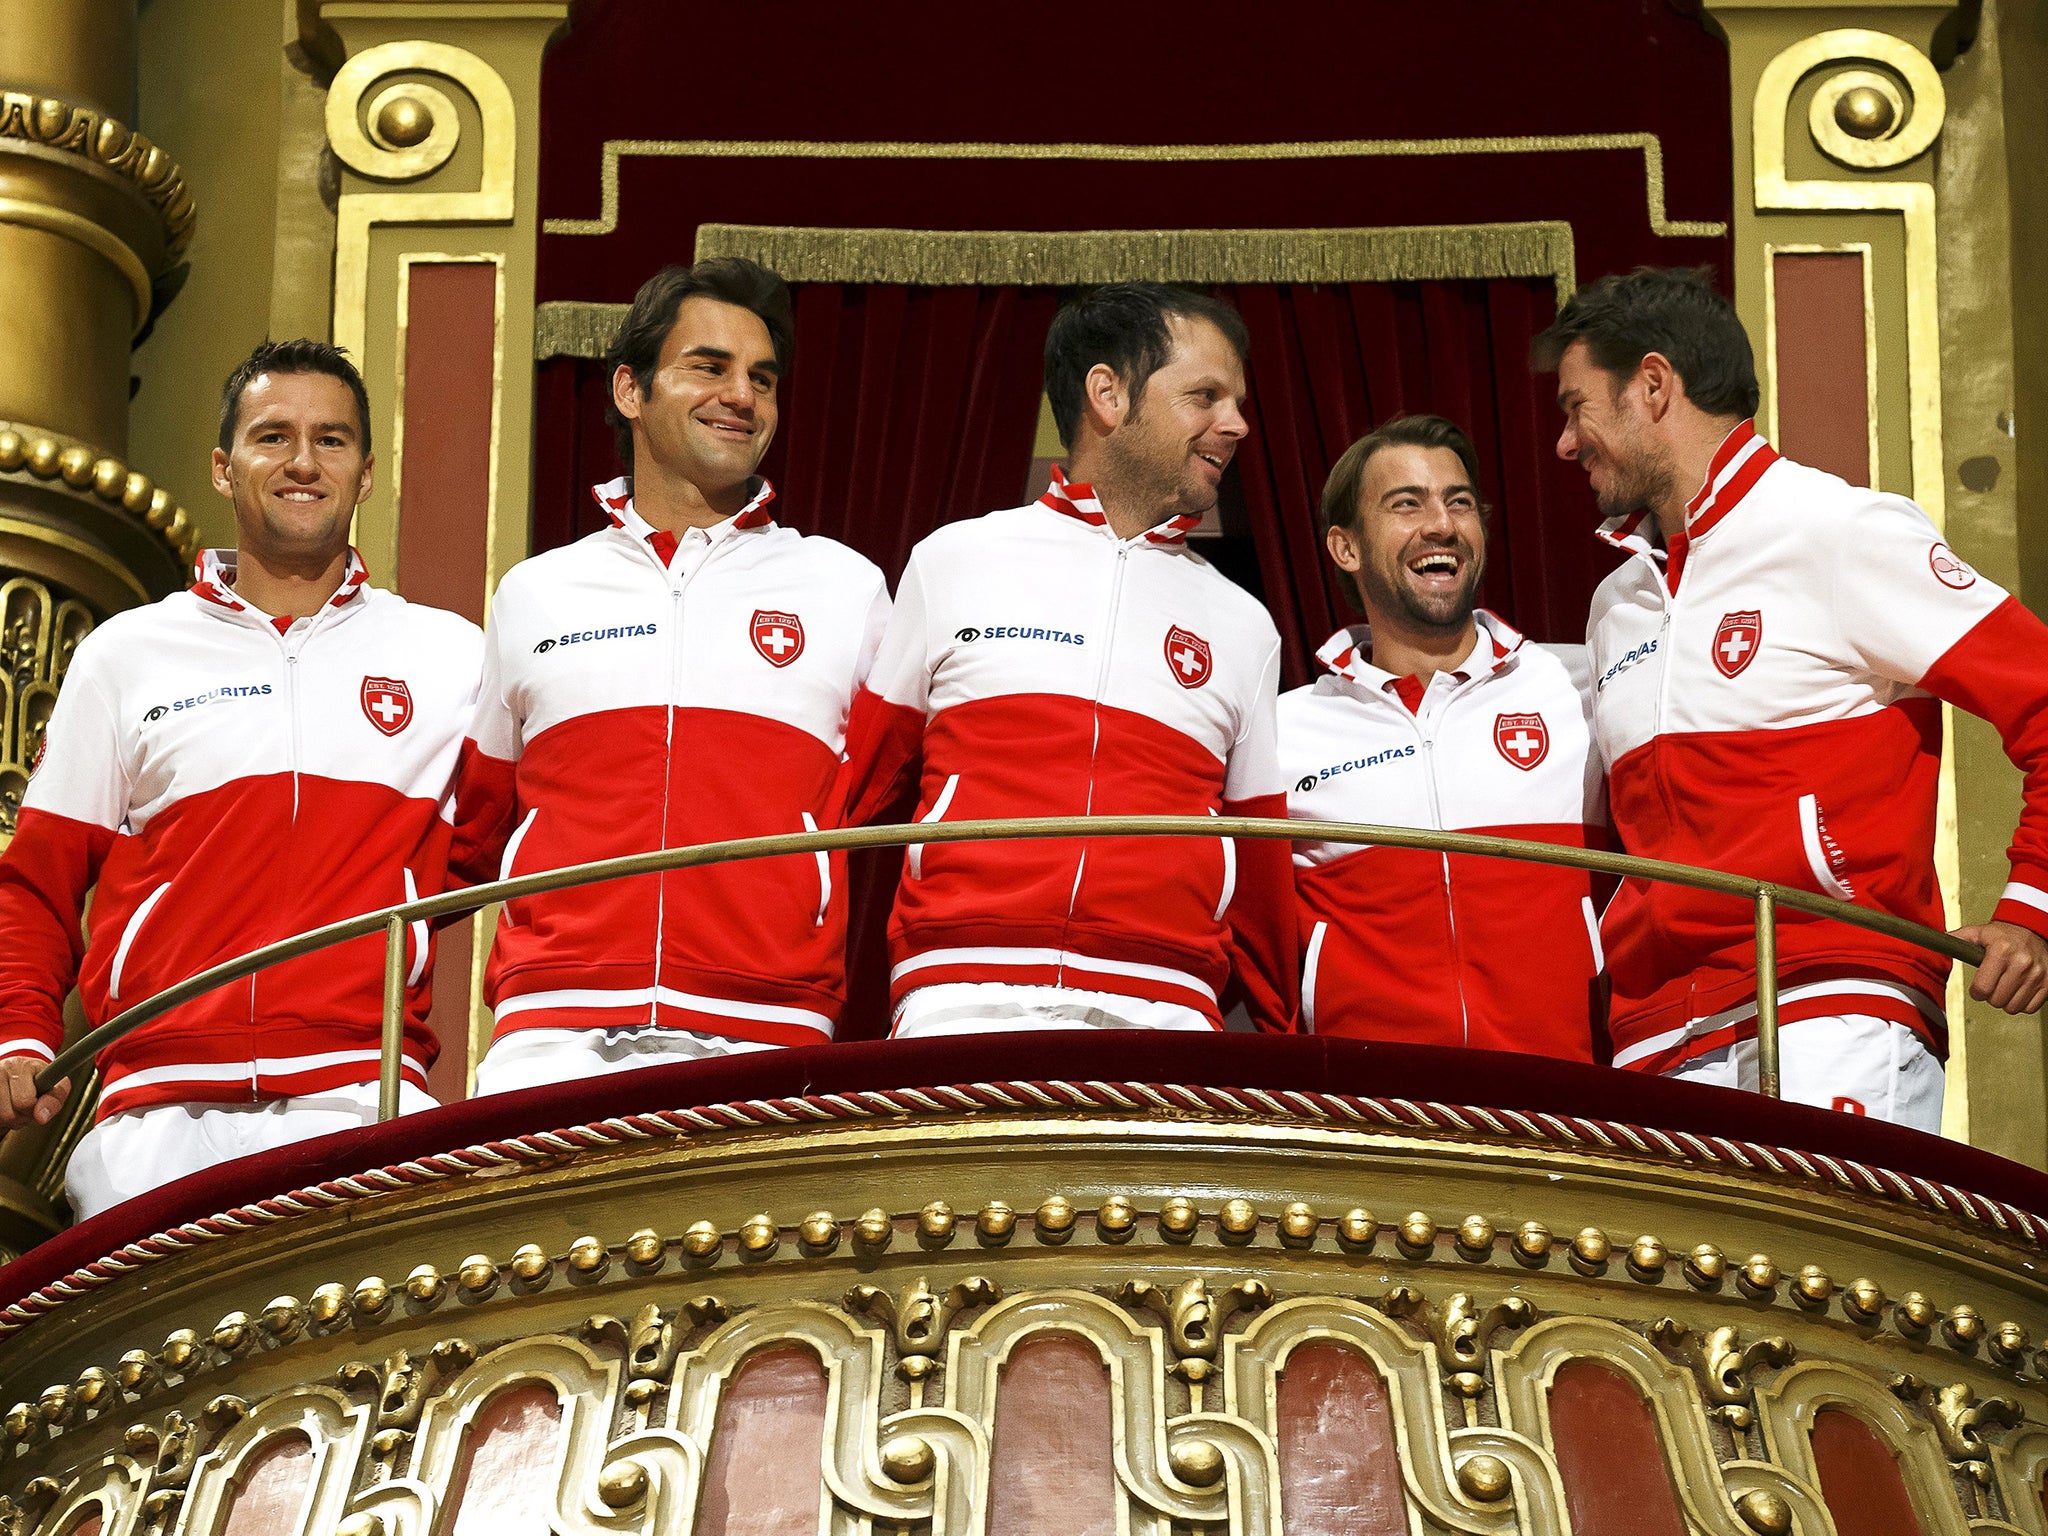 Swiss Davis Cup team players (L-R) Marco Chiudinelli, Roger Federer, Severin Luethi
(captain), Michael Lammer and Stanislas Wawrinka